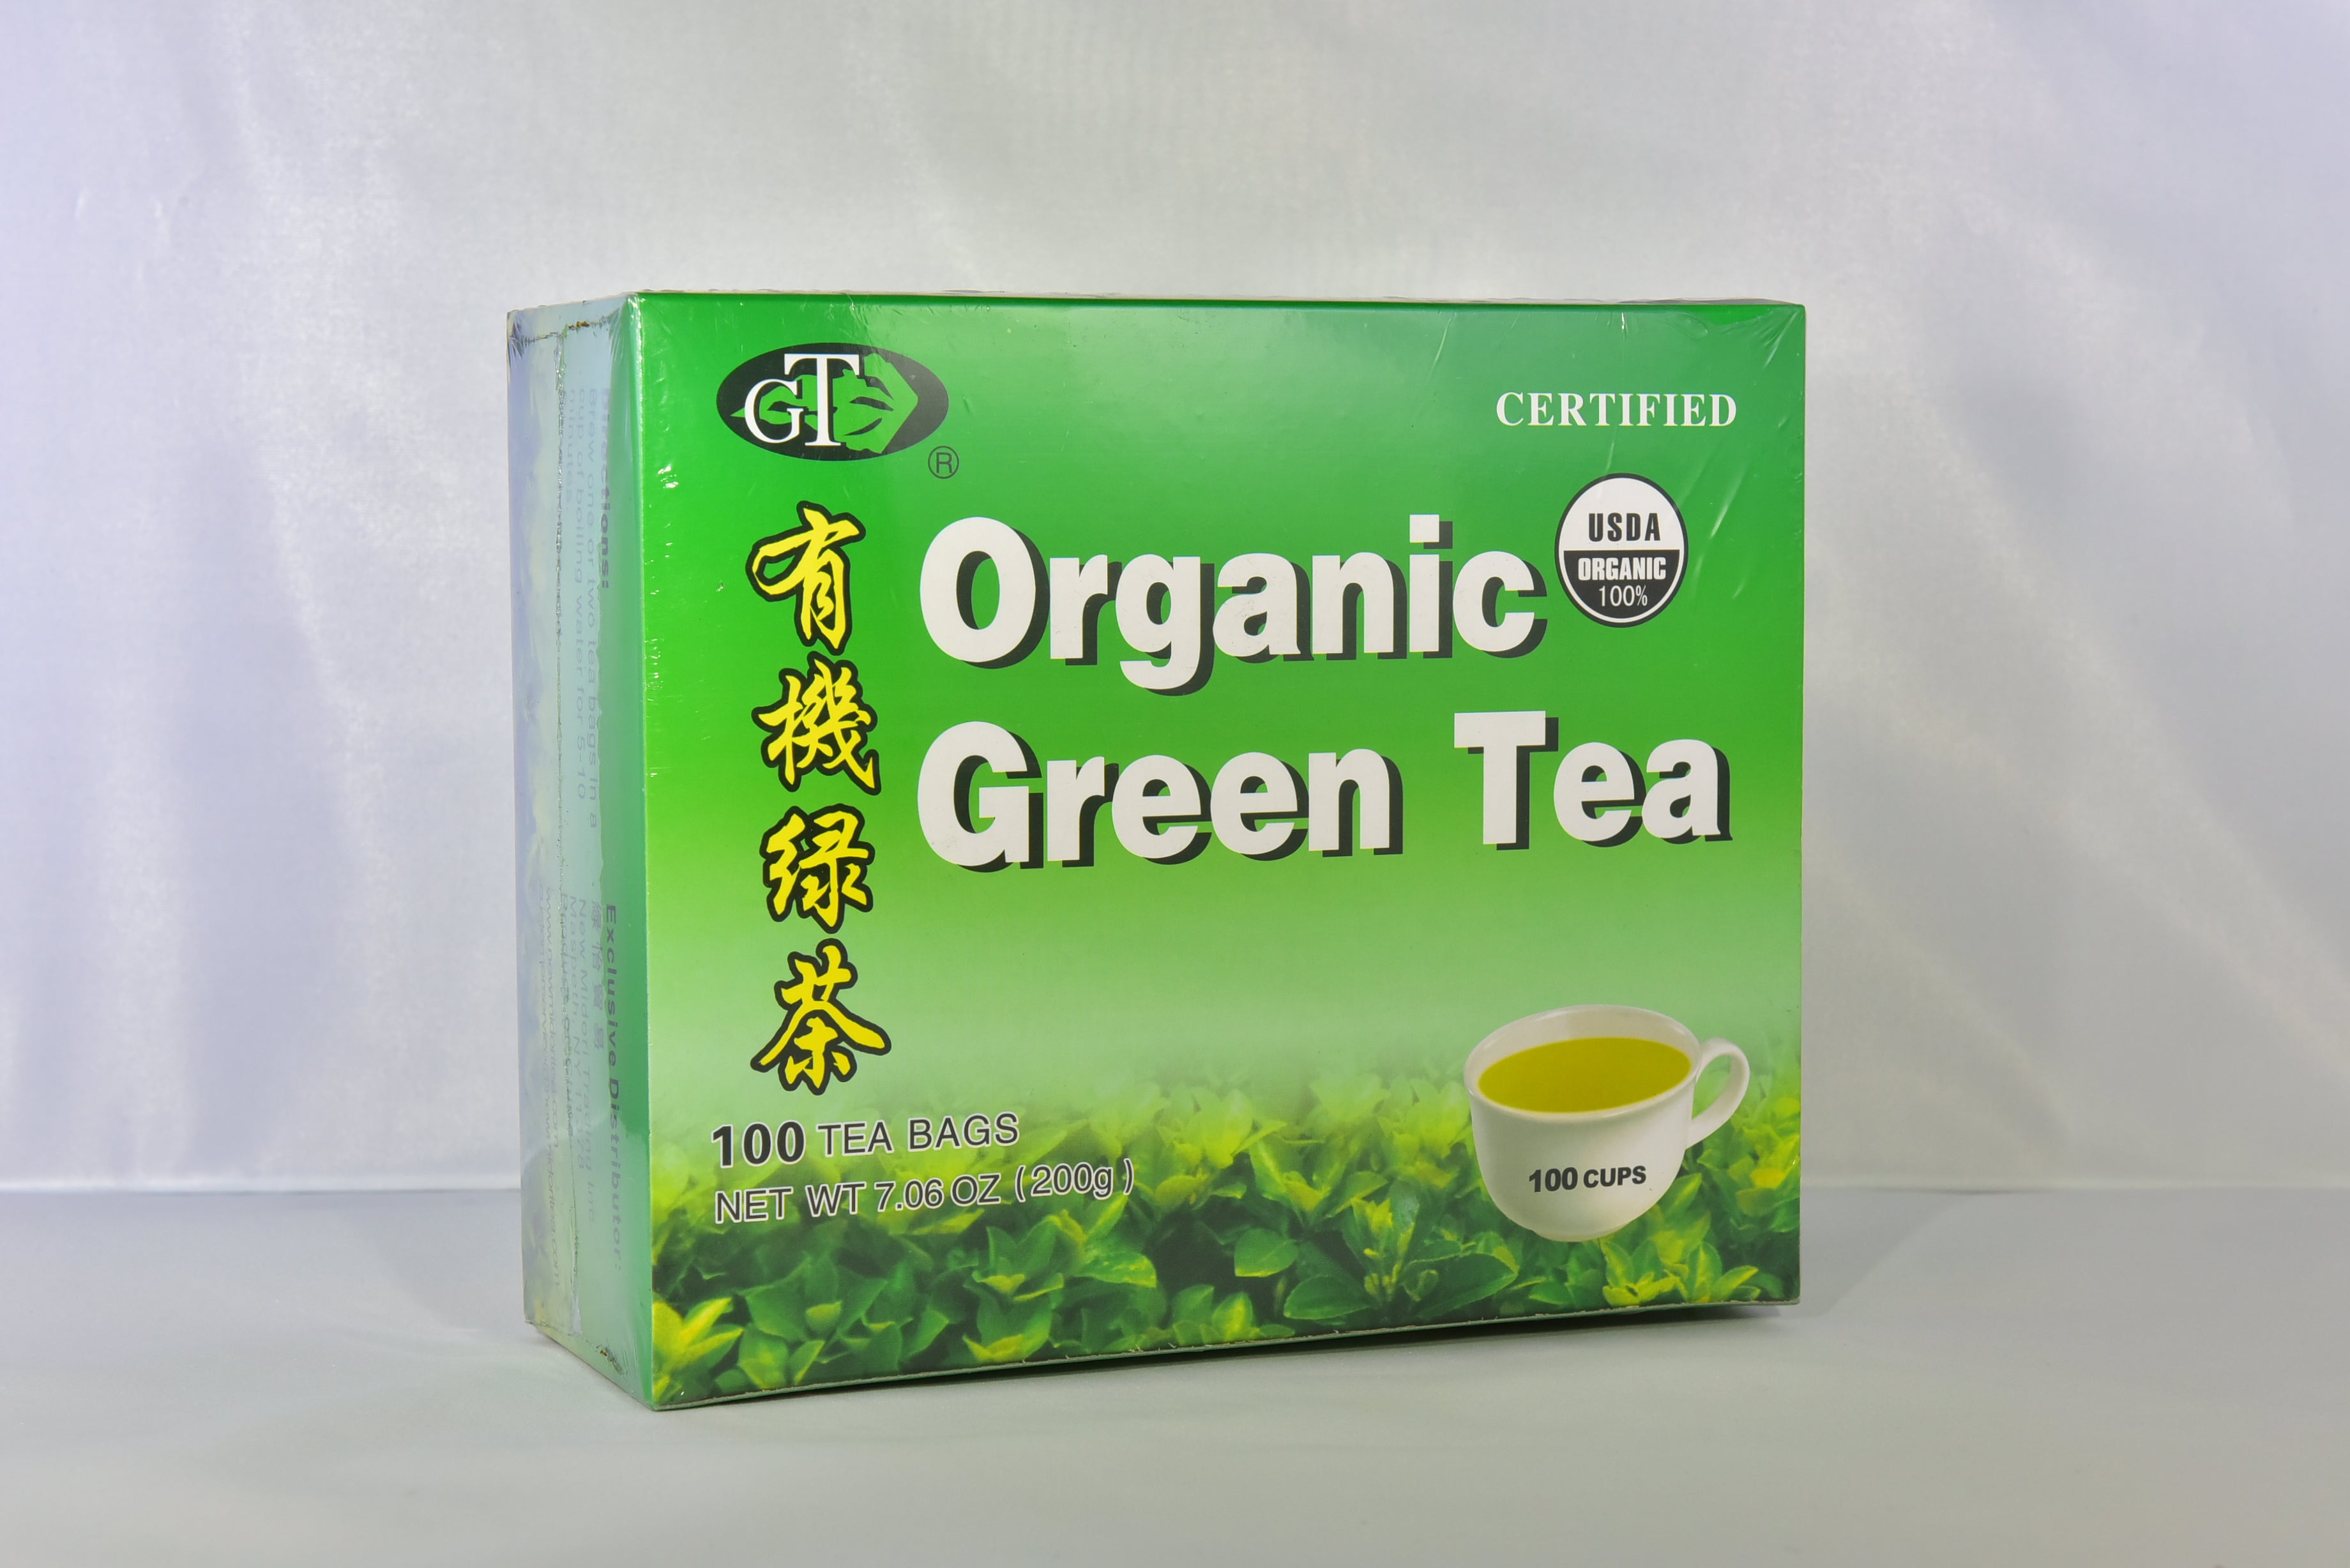 Organic Green Tea (100 Tea Bags) - GT - GoTo Tea by New Midori Trading Inc.